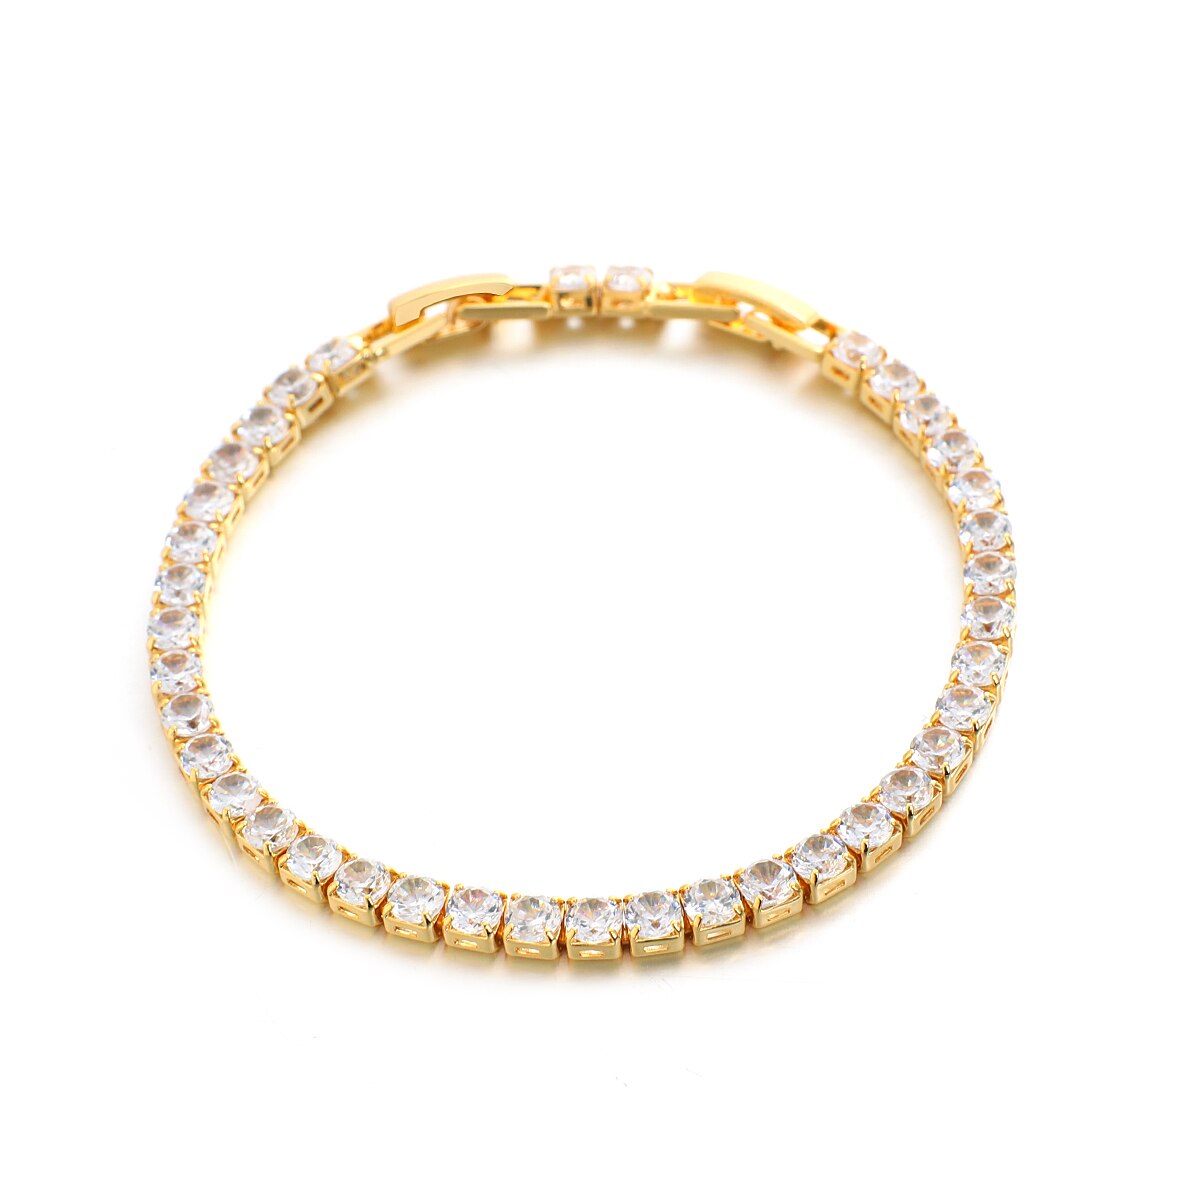 Mila Armband Yasemen Store Schmuck Accessoires Edelstahl Stainless Steel 14K Vergoldet Gold jewel jewelry bracelet